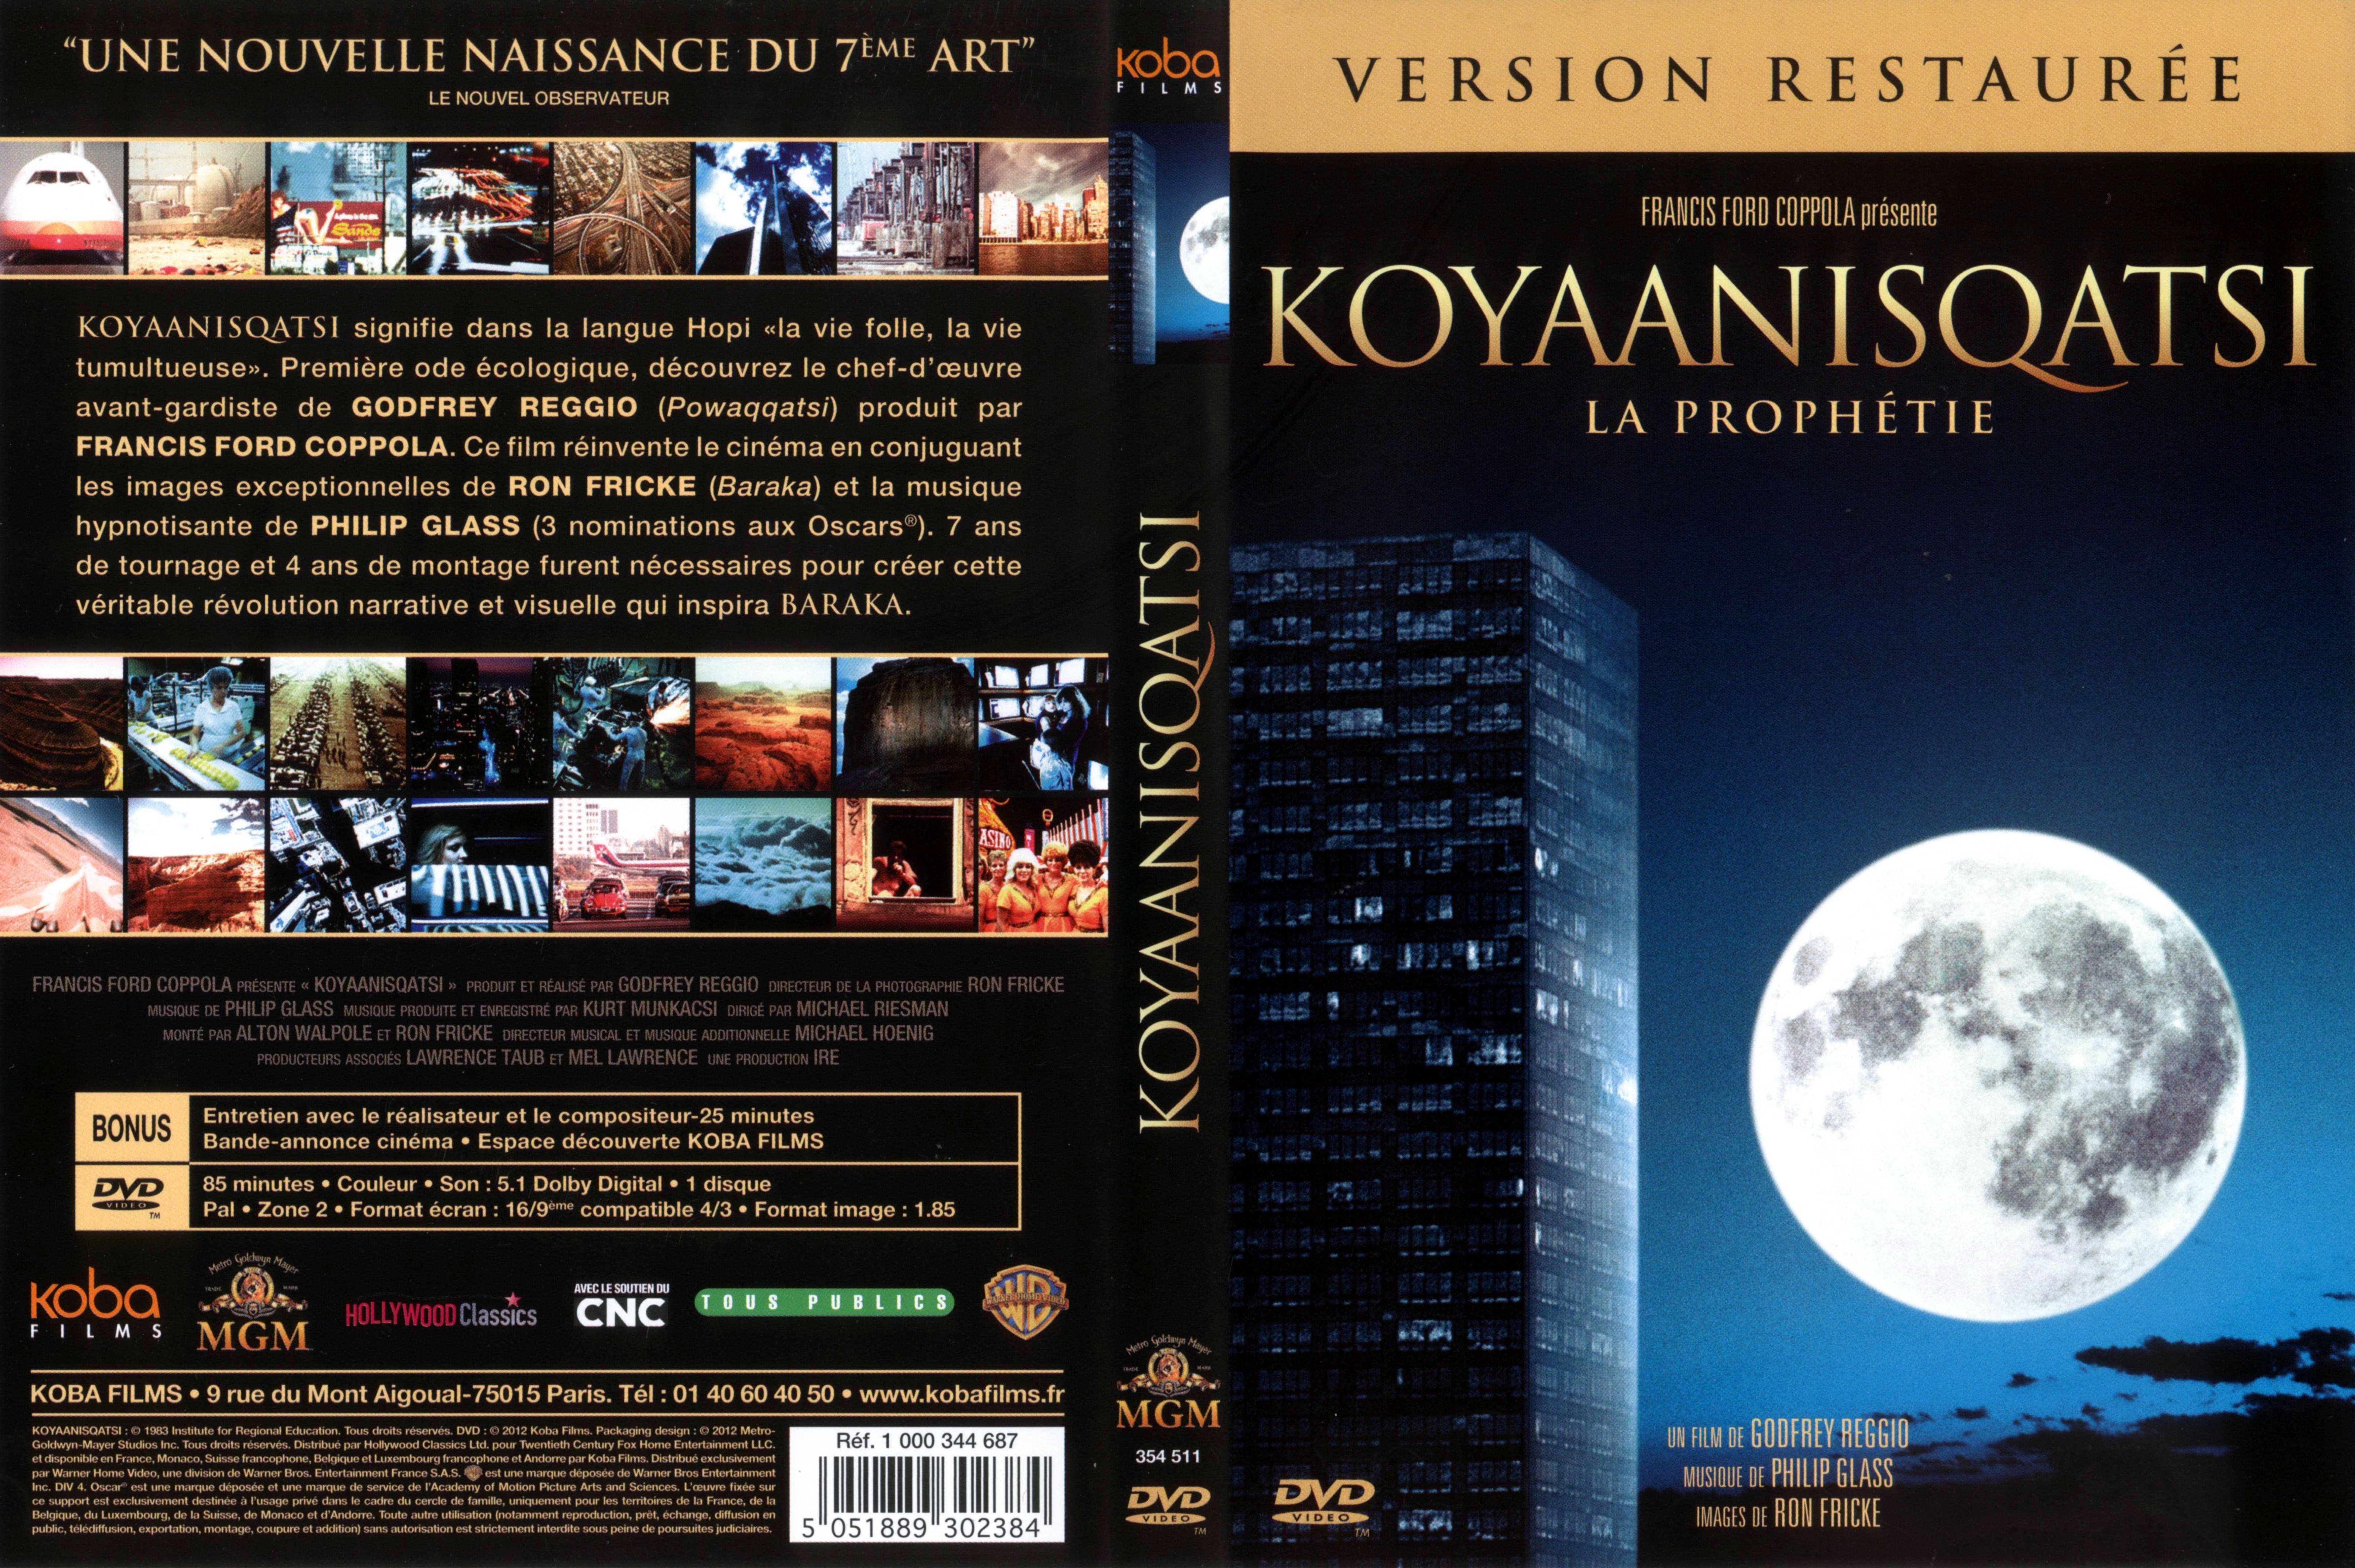 Jaquette DVD Koyaanitsqatsi